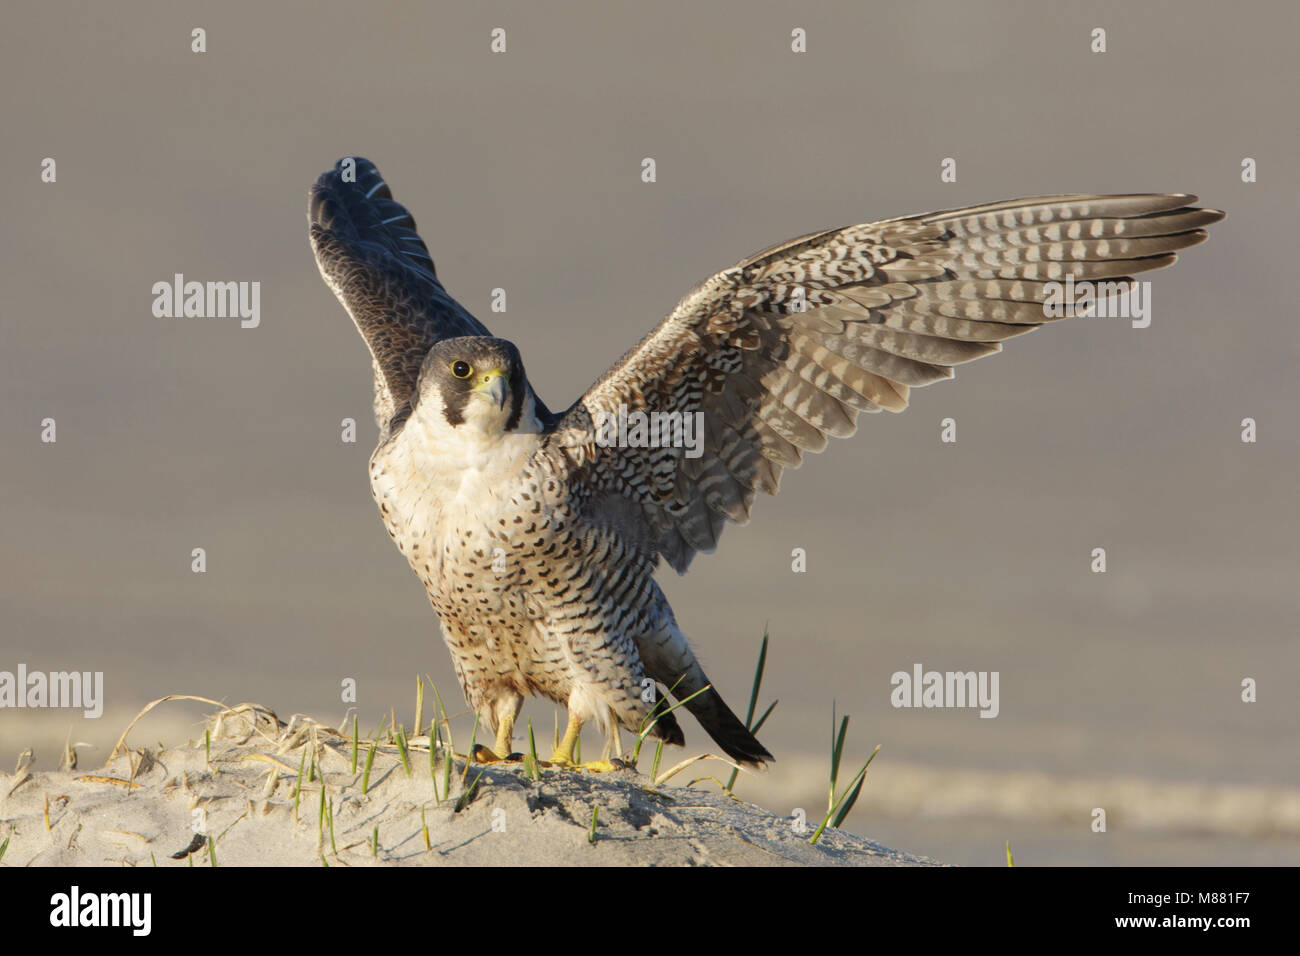 Slechtvalk man op het strand; Peregrine Falcon Male on the beach; Stock Photo